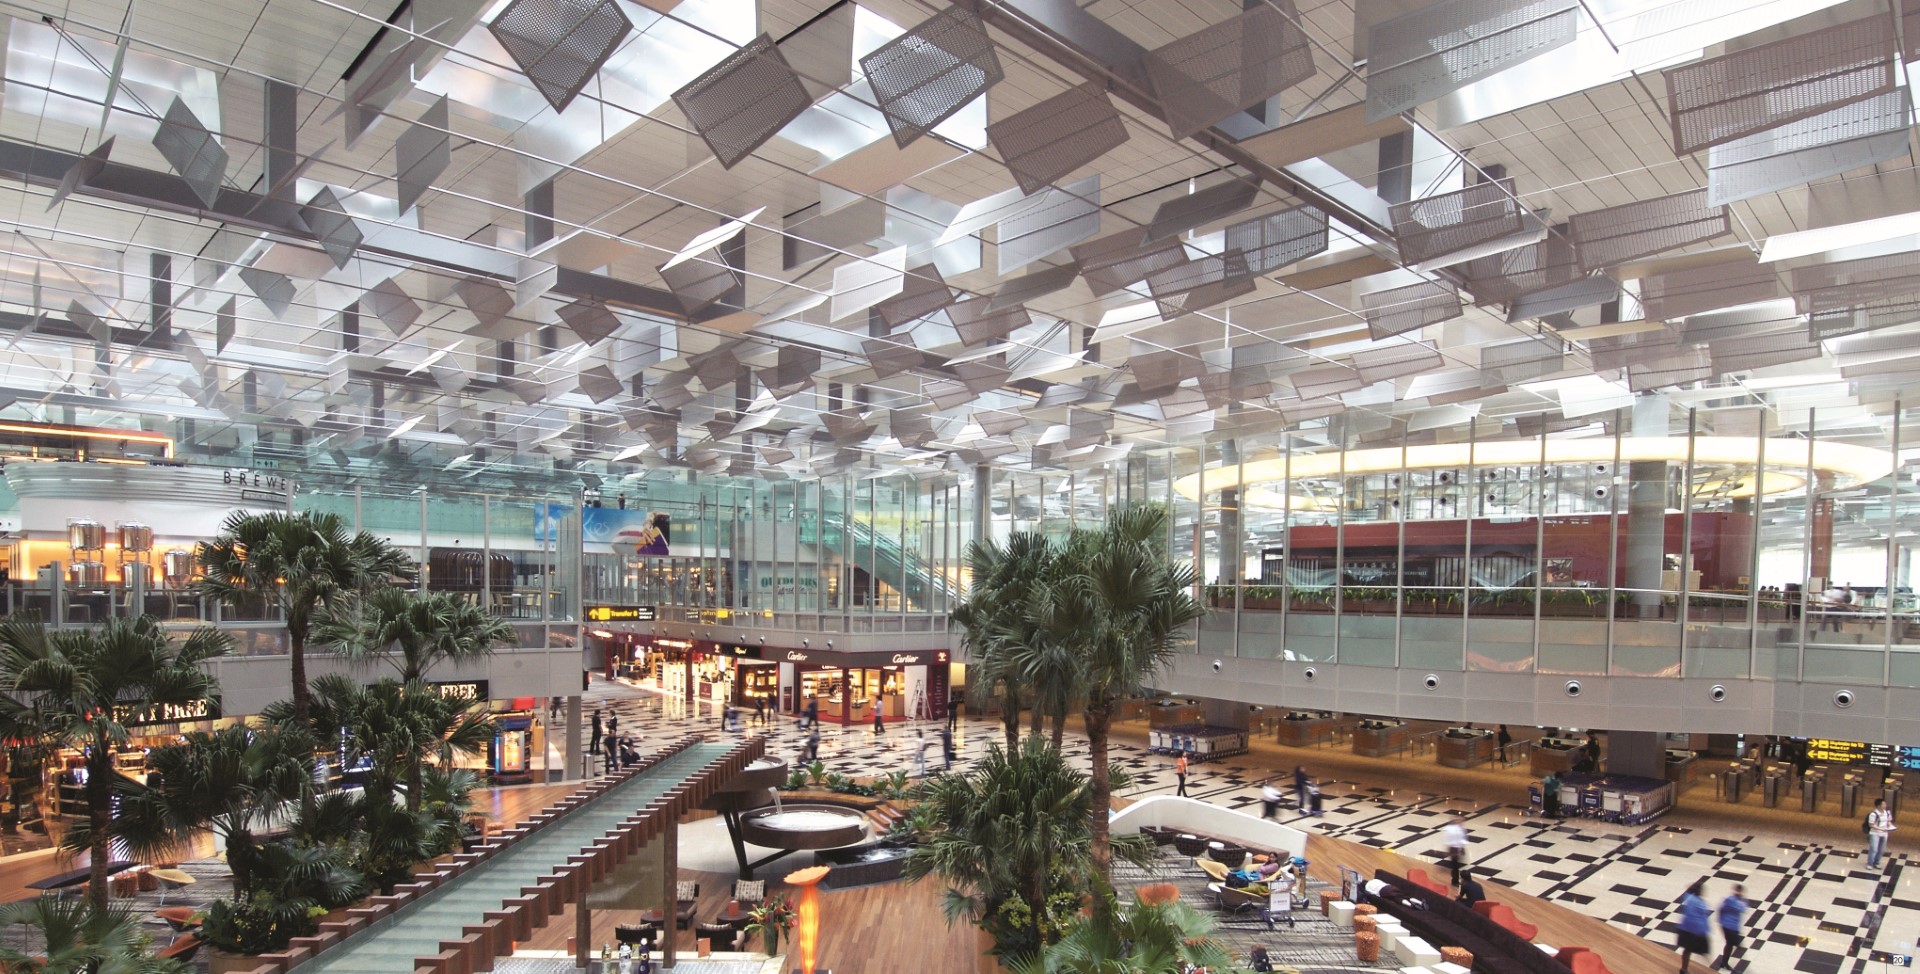 Changi Airport, Terminal 3